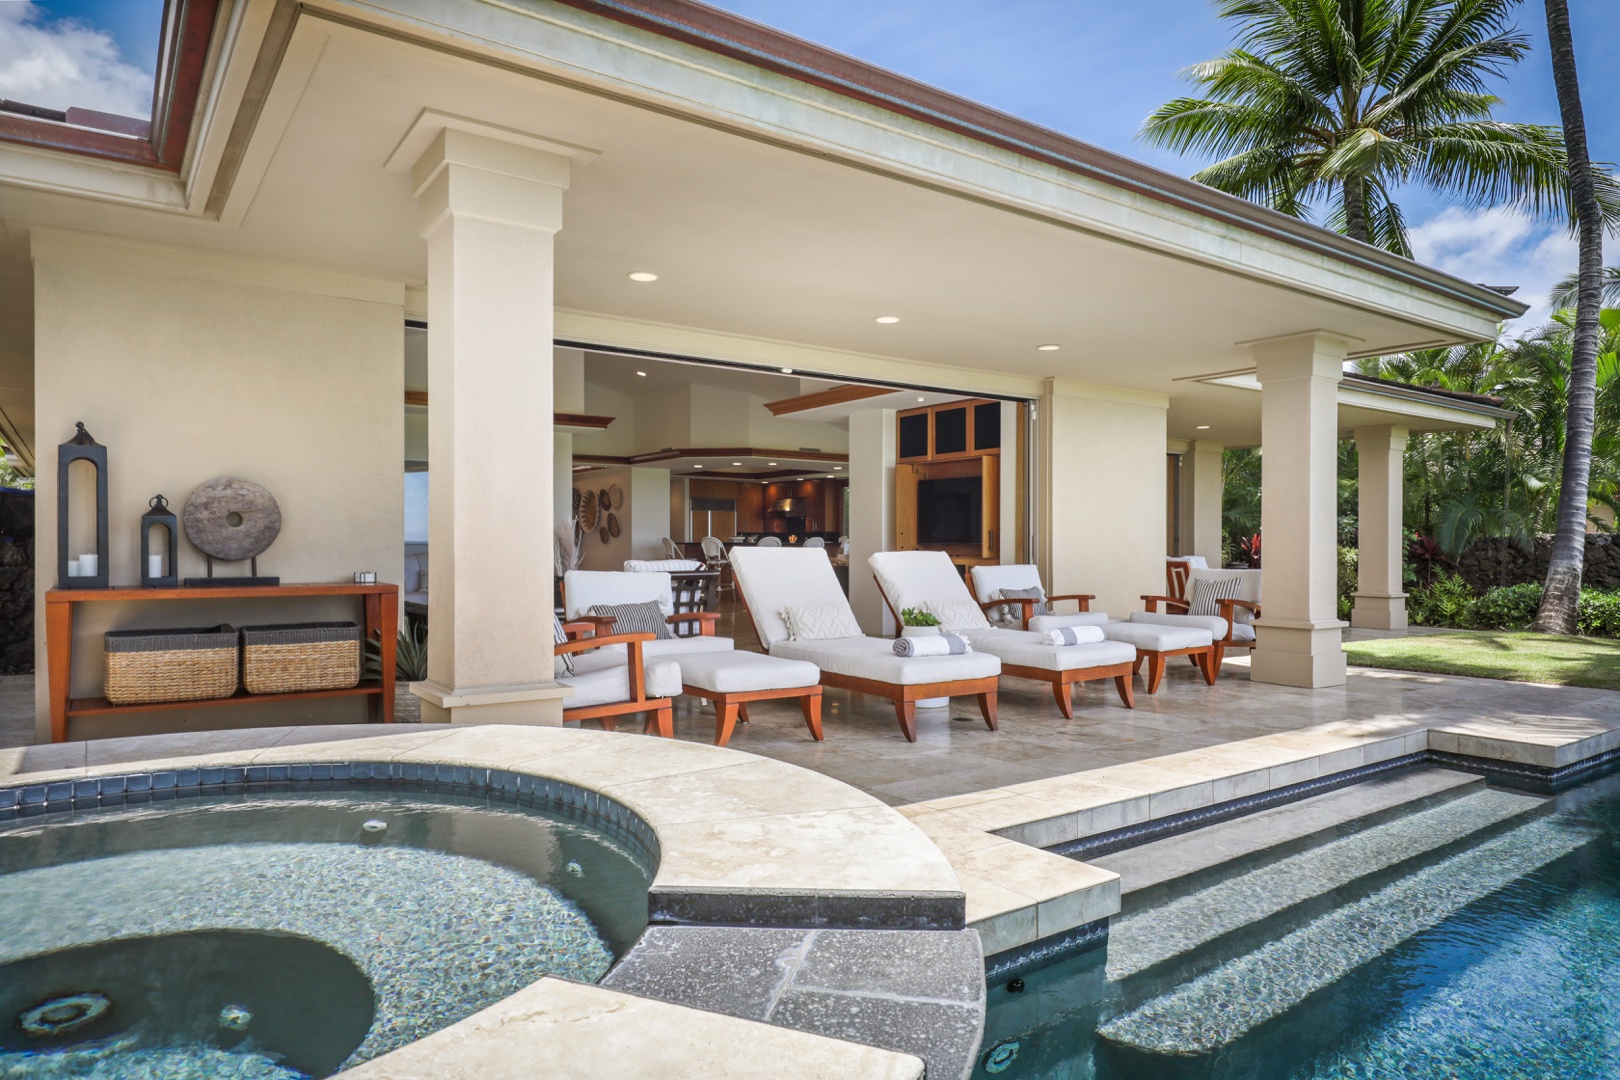 Kailua Kona Vacation Rentals, 4BD Pakui Street (147) Estate Home at Four Seasons Resort at Hualalai - Reverse angle of pool deck.